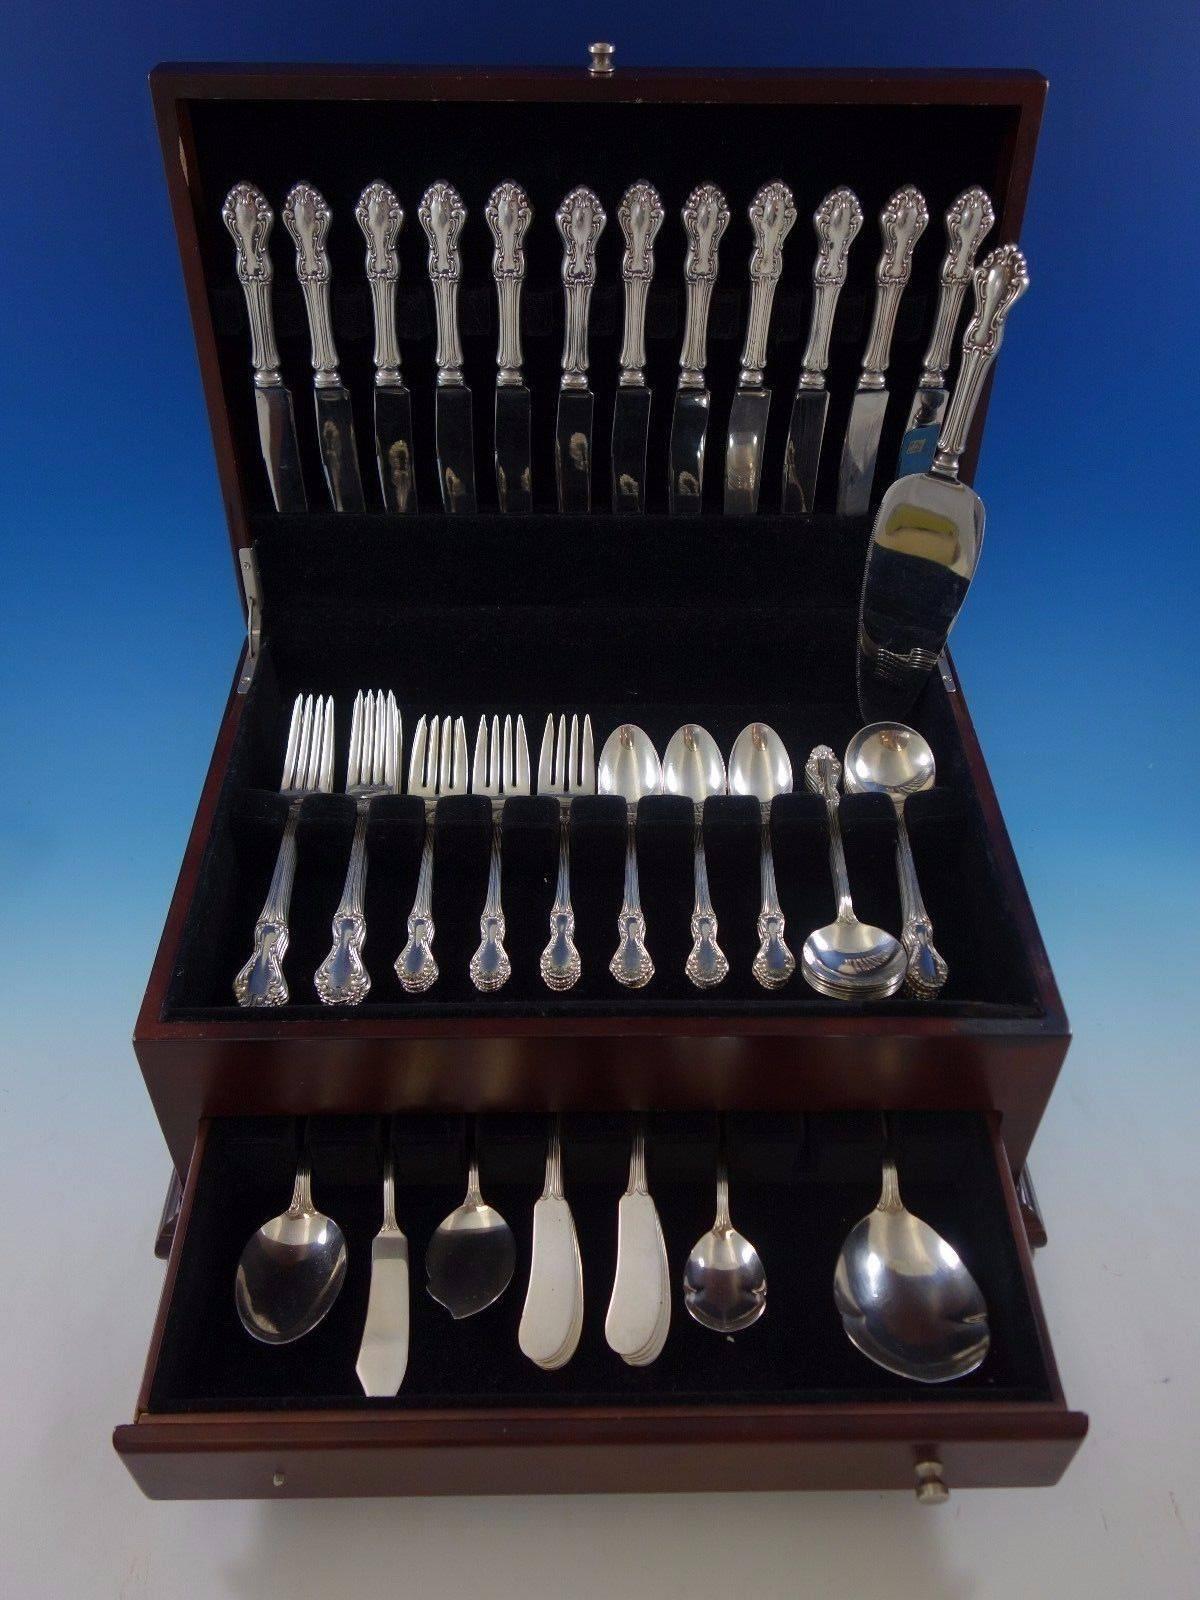 Princess Elizabeth by National sterling silver flatware set 78 pieces. This set includes: 

Twelve knives, 8 3/4